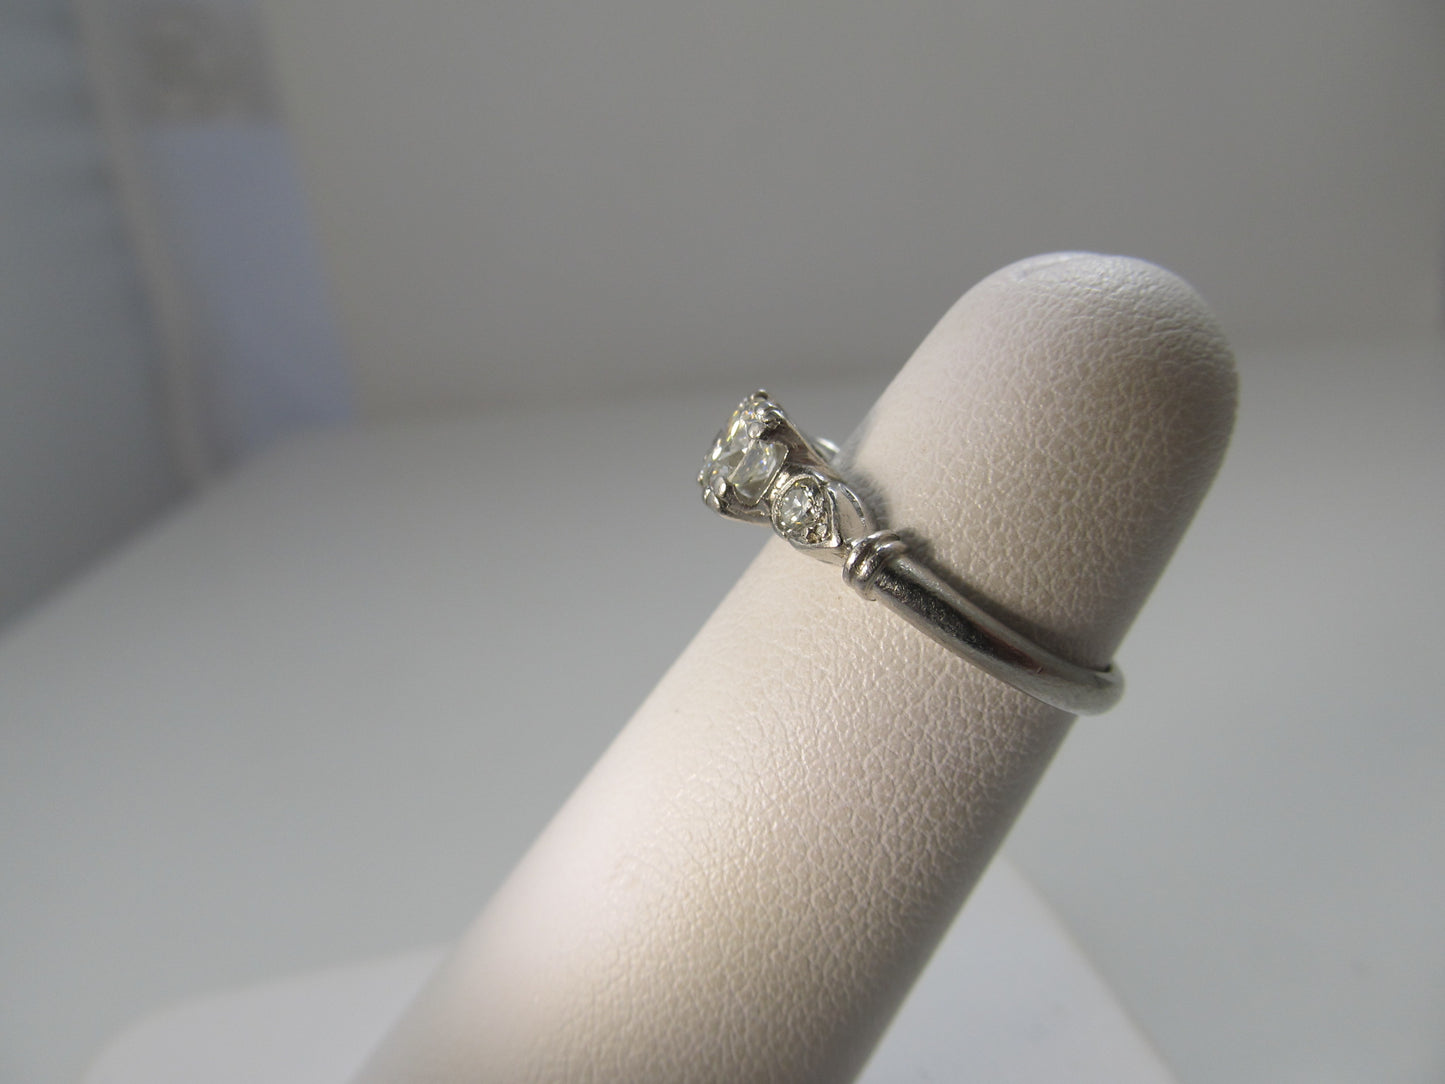 Vintage platinum diamond engagement ring